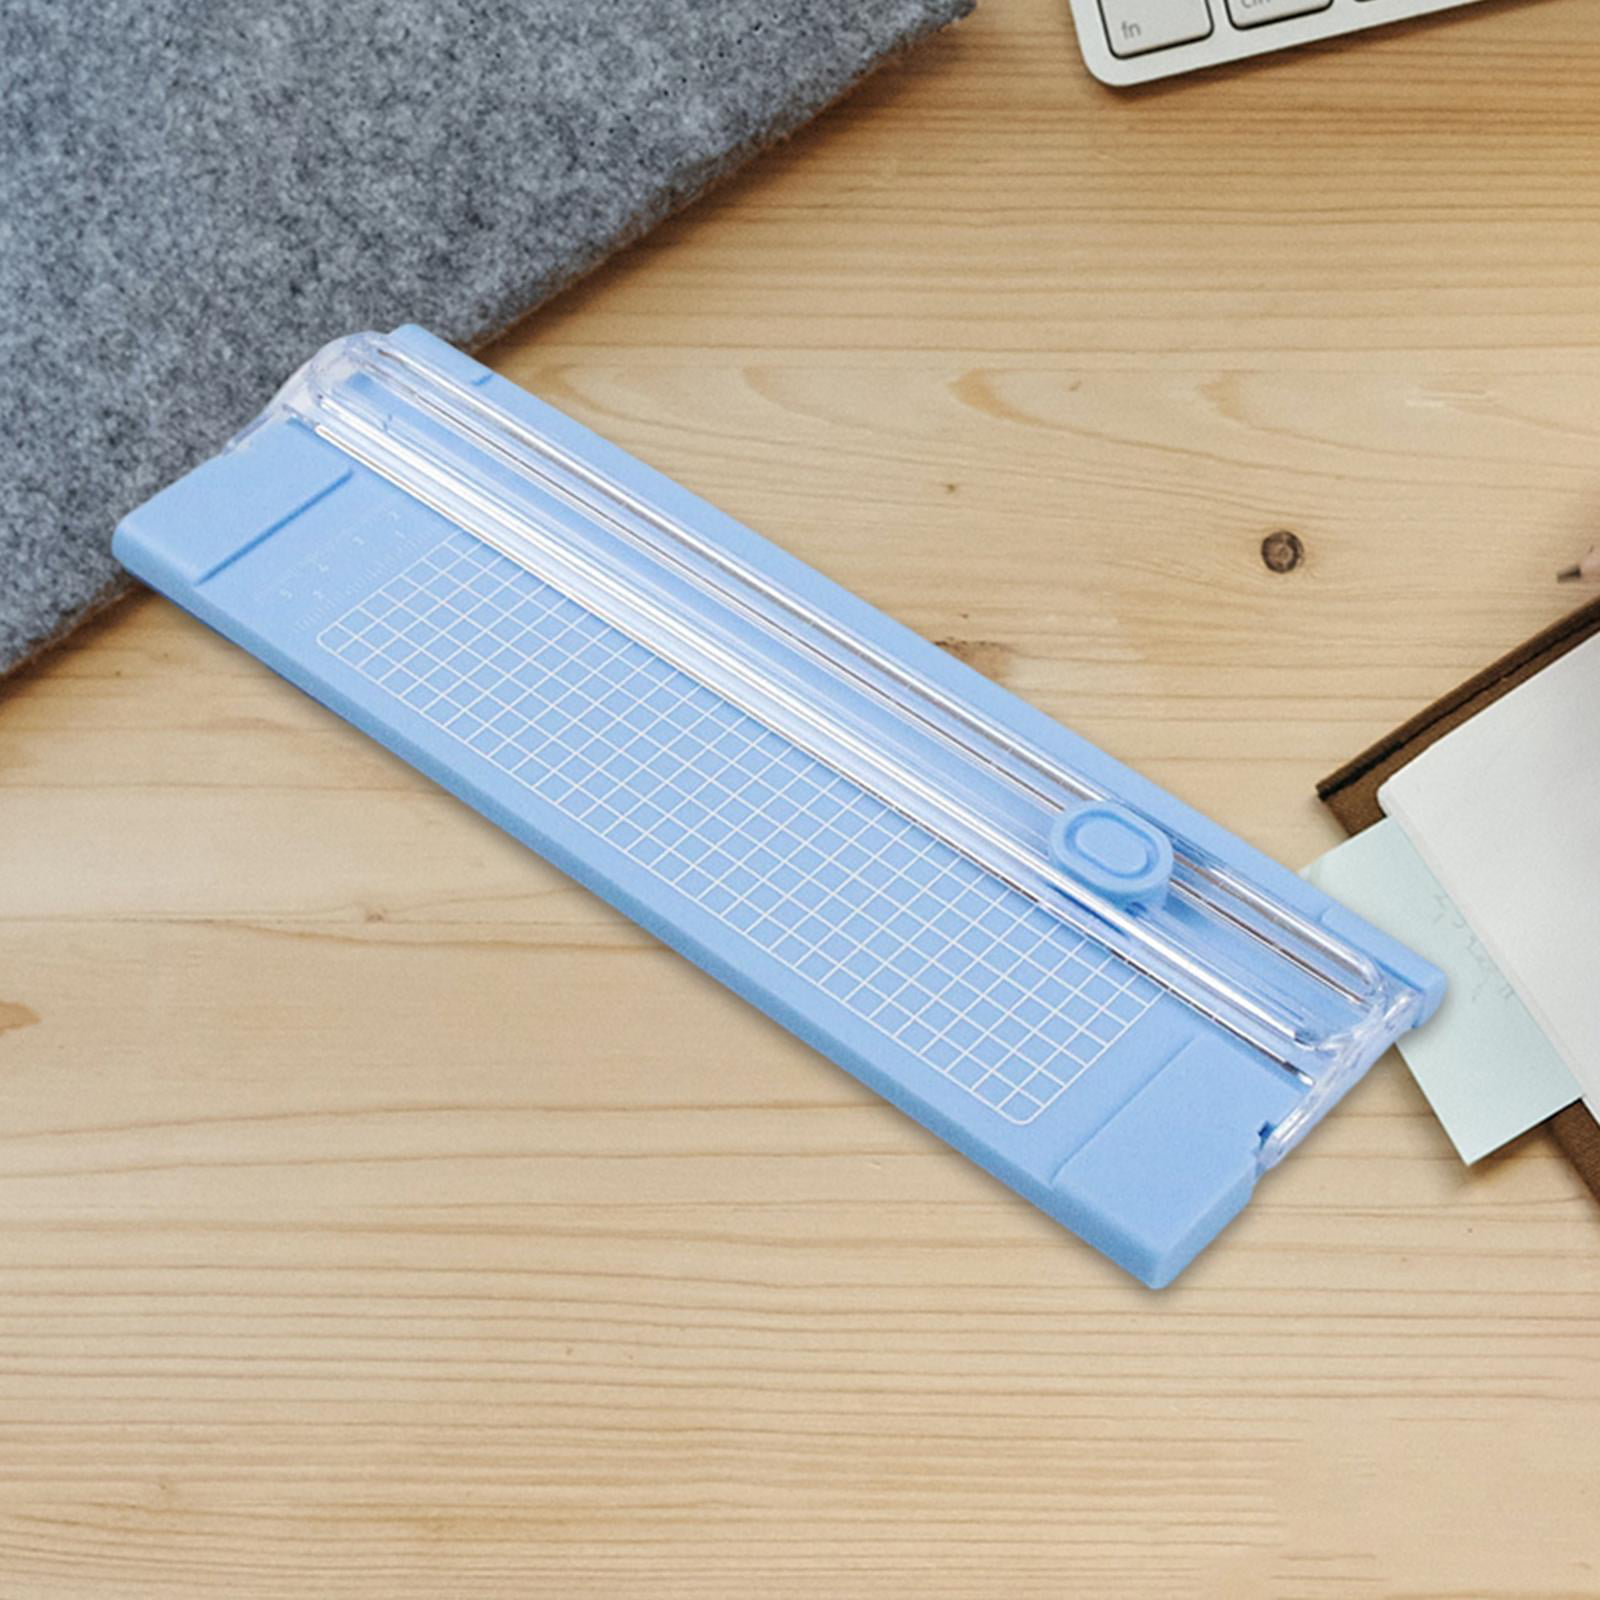 MOHAMM 1 Piece Multifunction Light Paper Cutter Trimmer for A3 A4  Scrapbooking Journal Tool DIY Craft